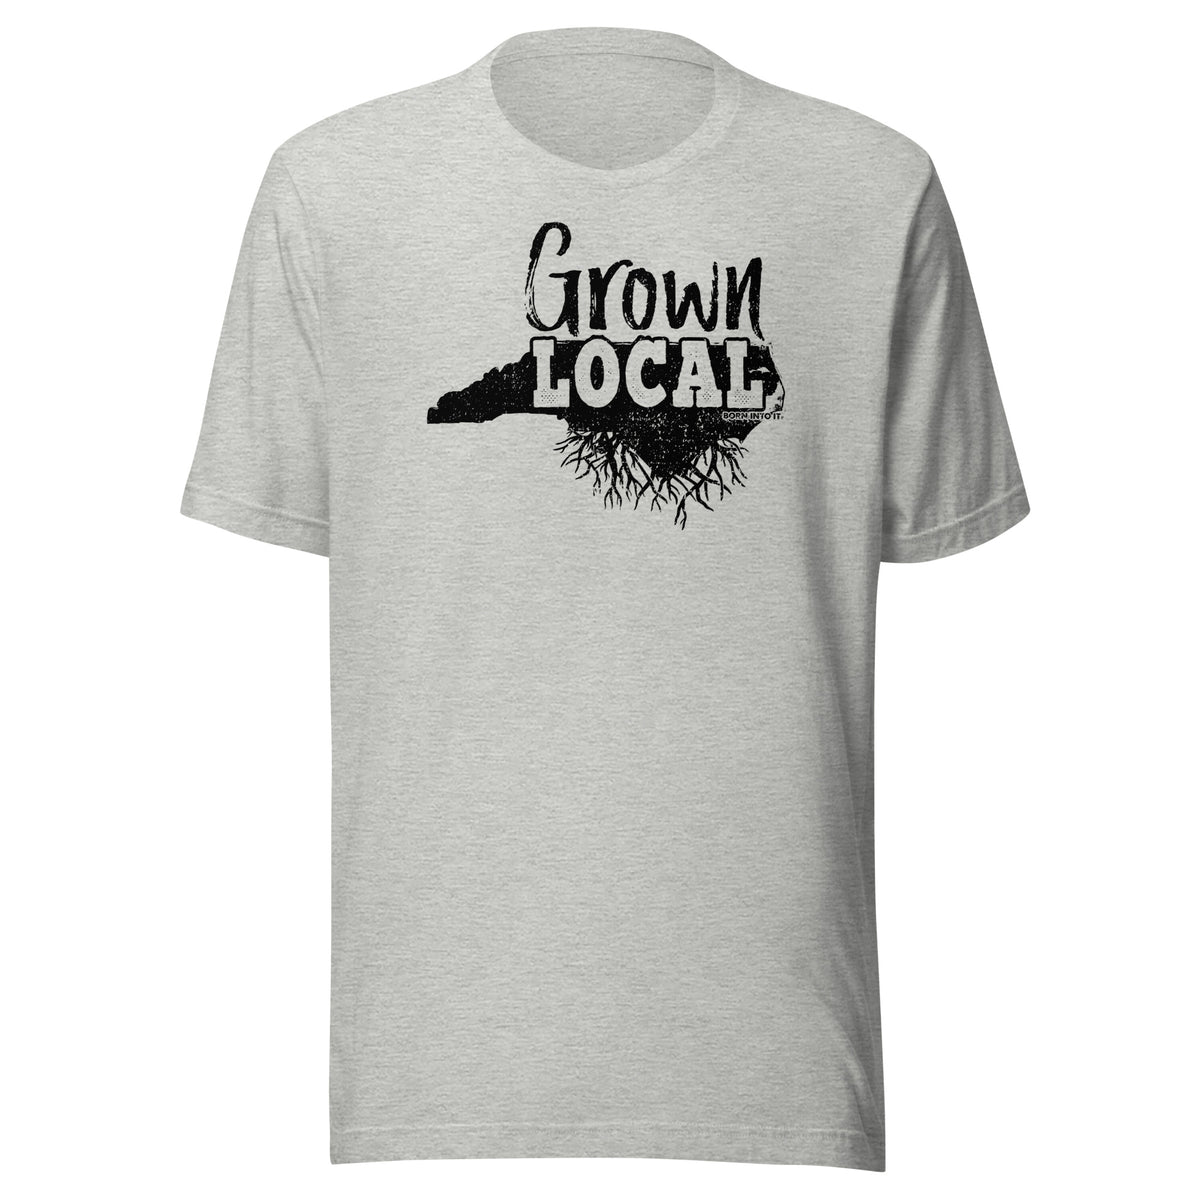 Grown Local New Carolina State Pride Unisex T-Shirt